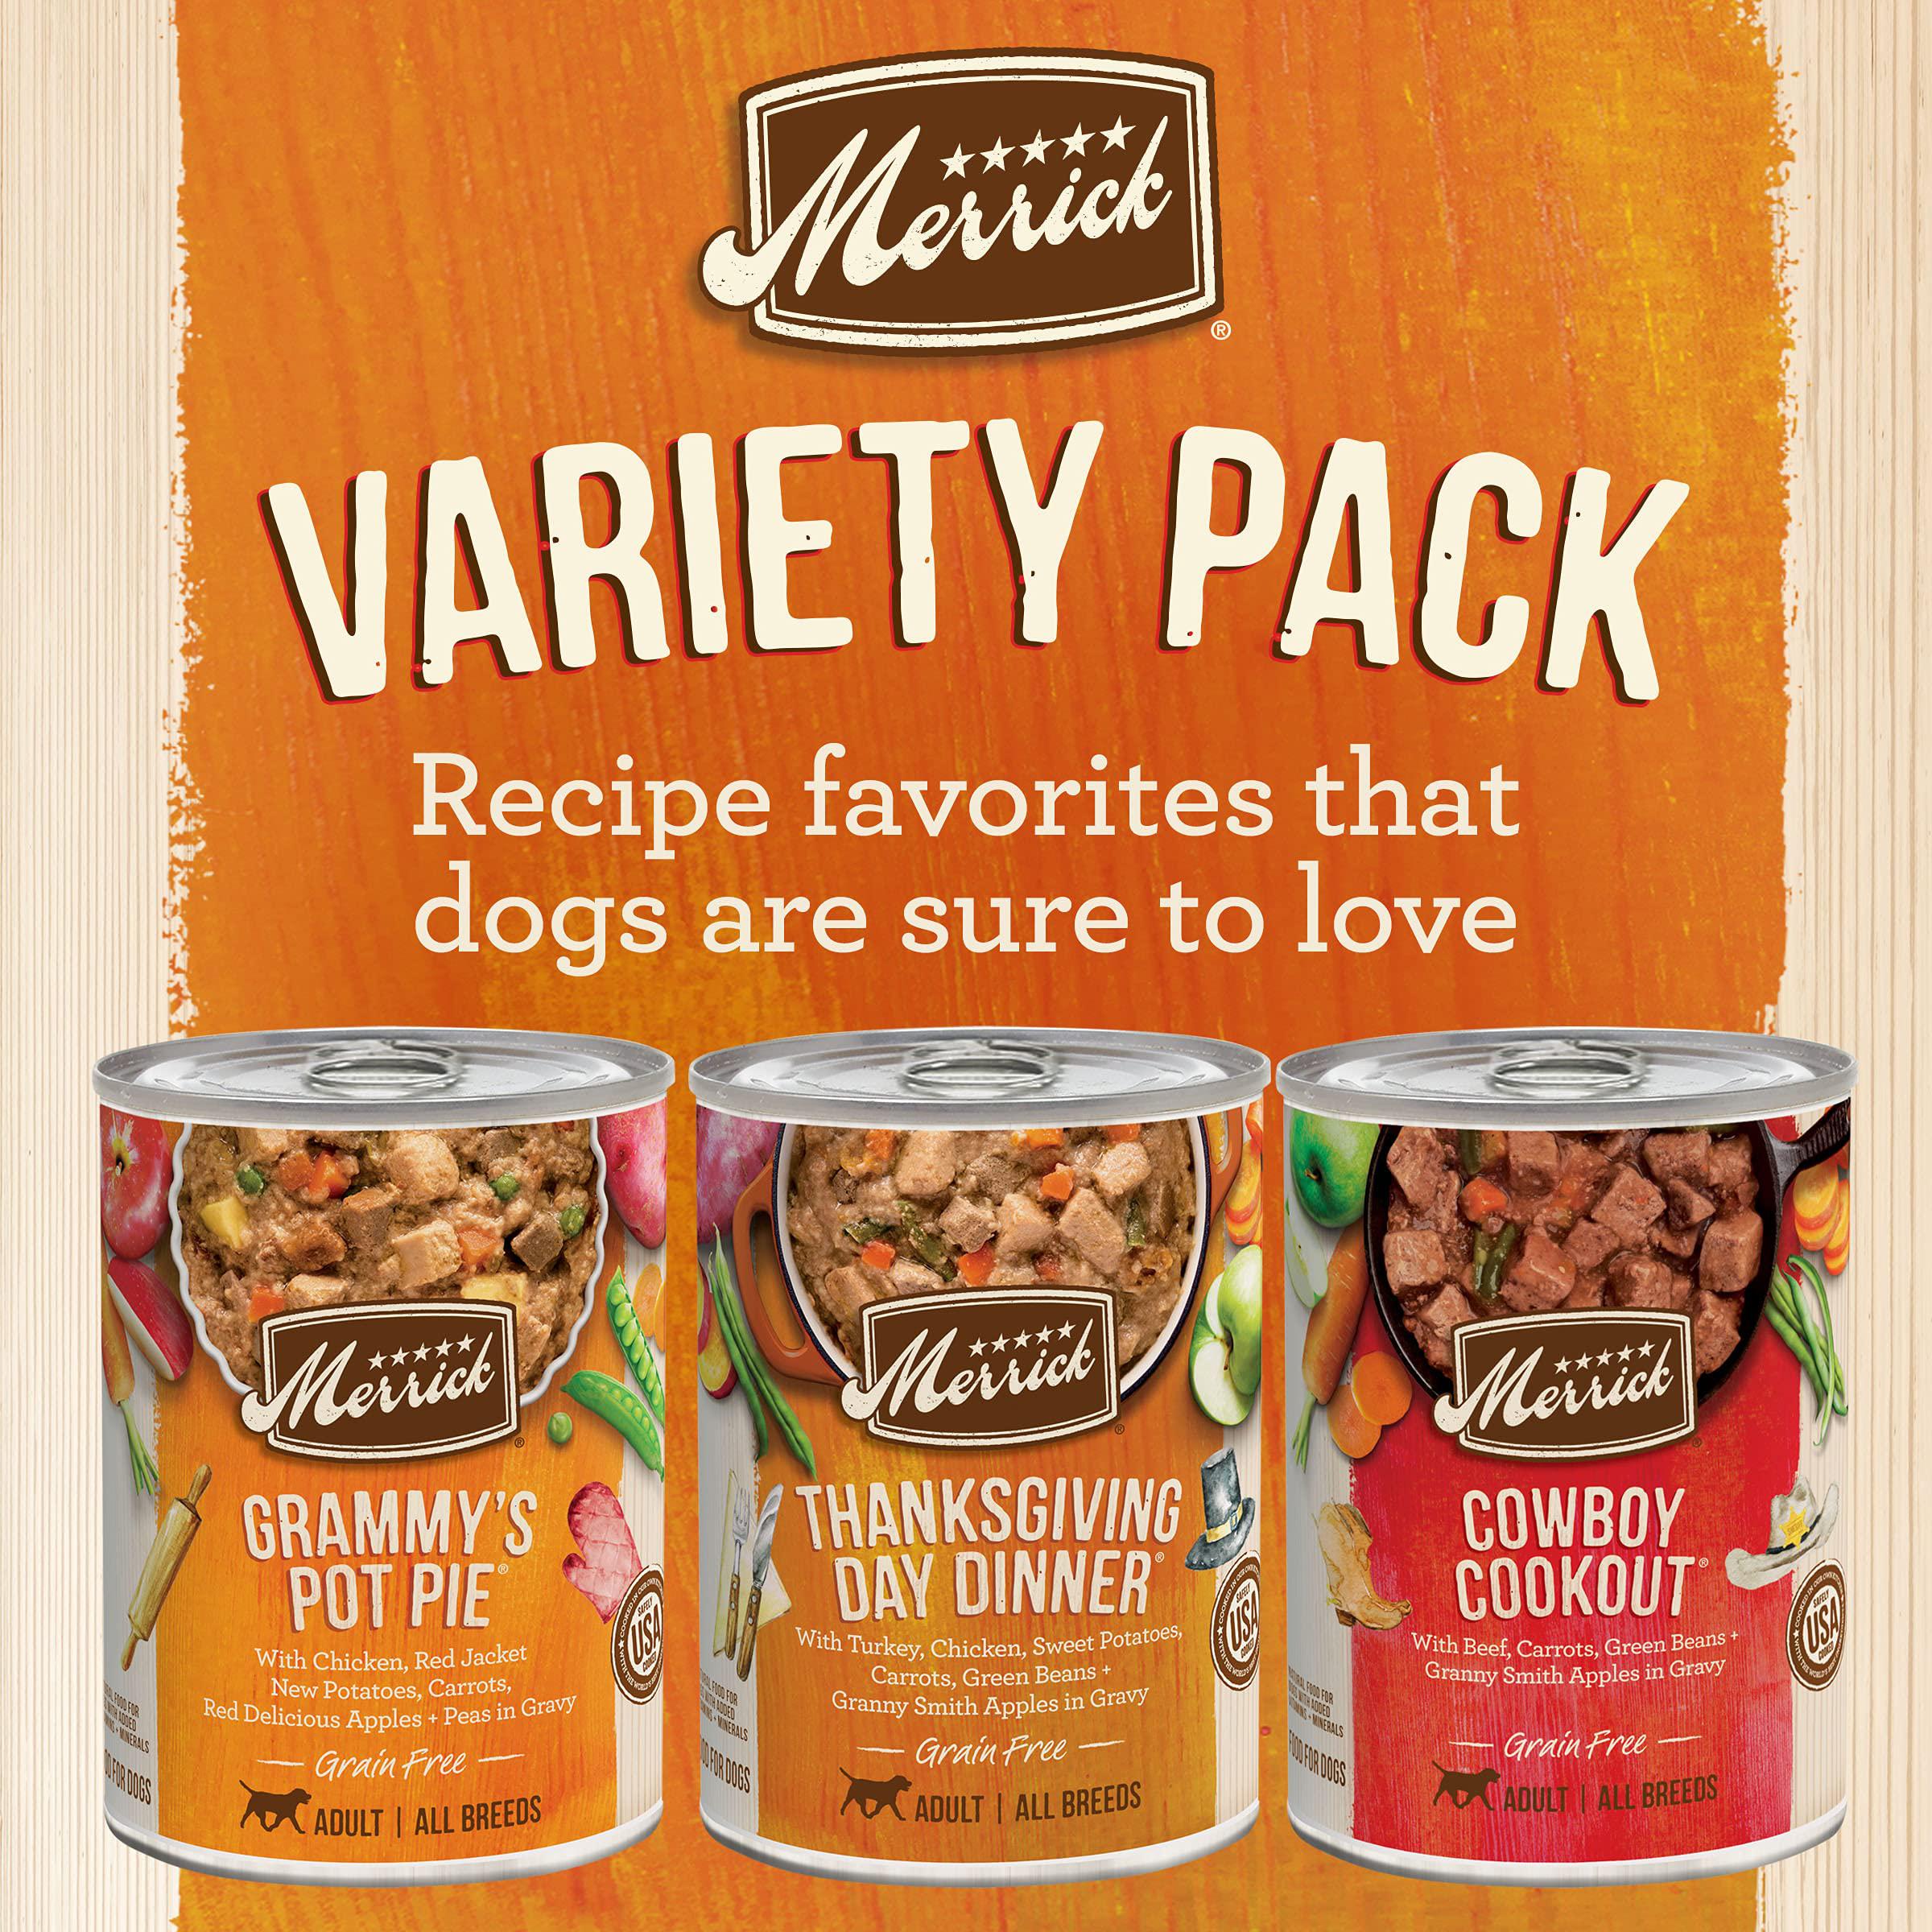 merrick grain free wet dog food variety pack, grain free favorites canned dog food - (12) 12.7 oz. cans